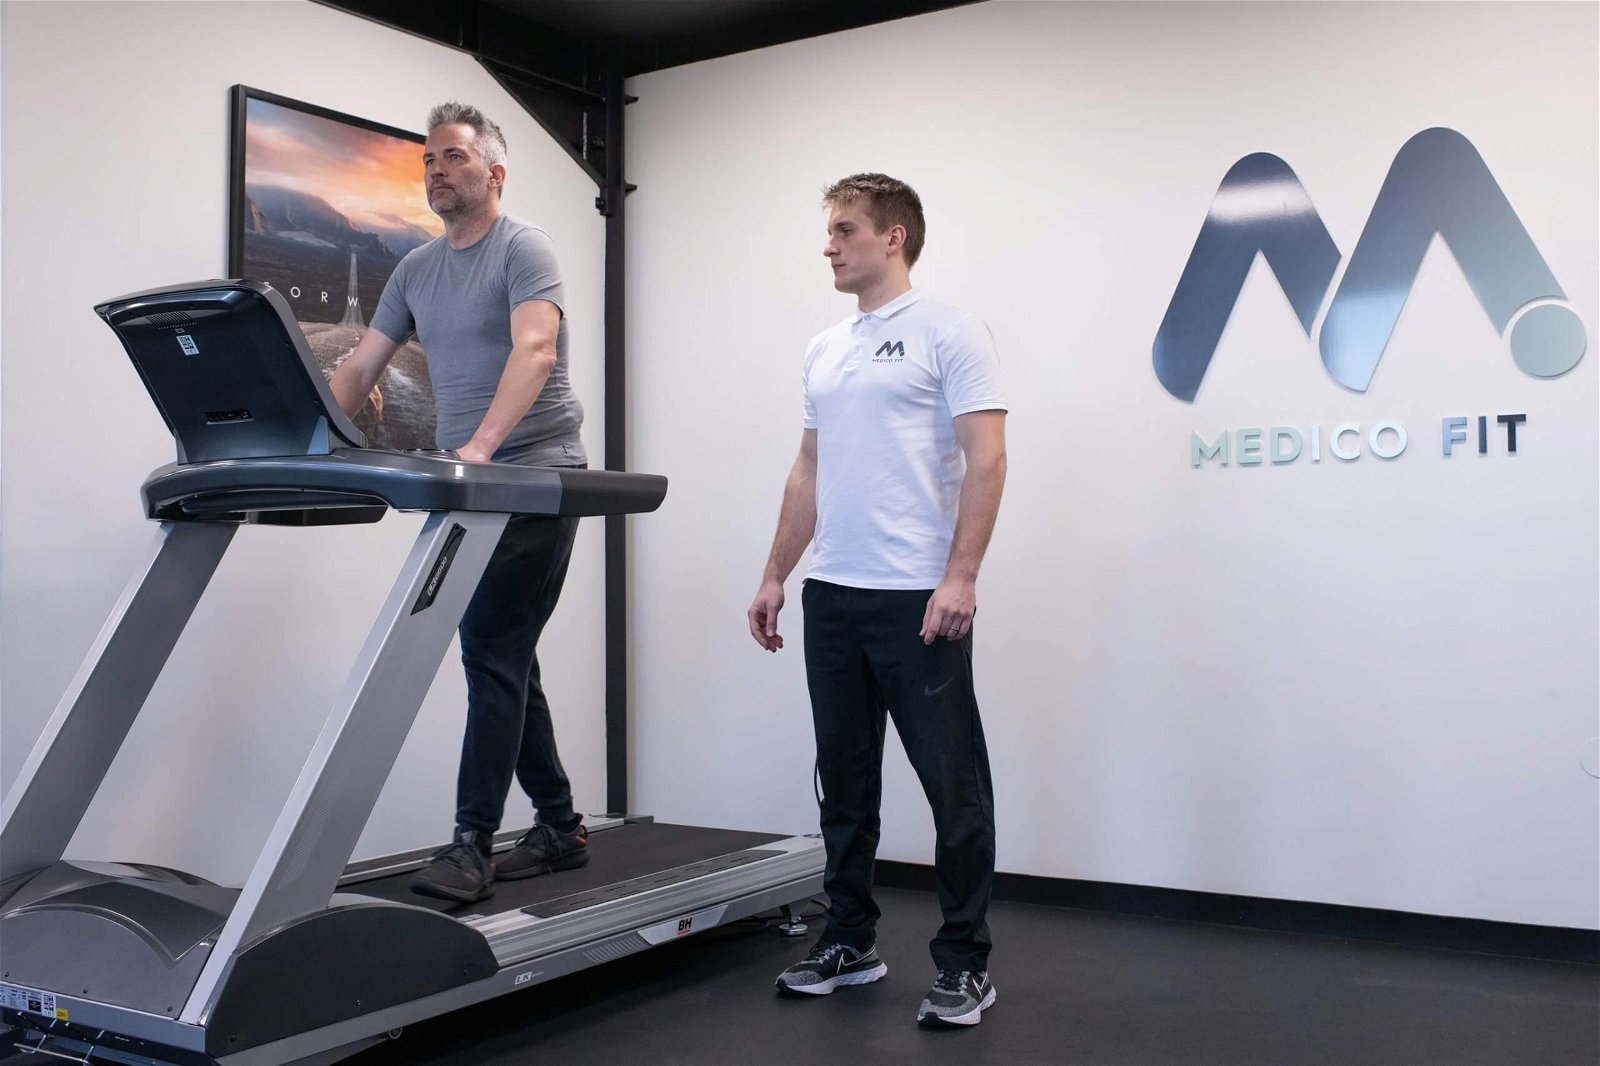 exercises-on-the-treadmill-medicofit-min